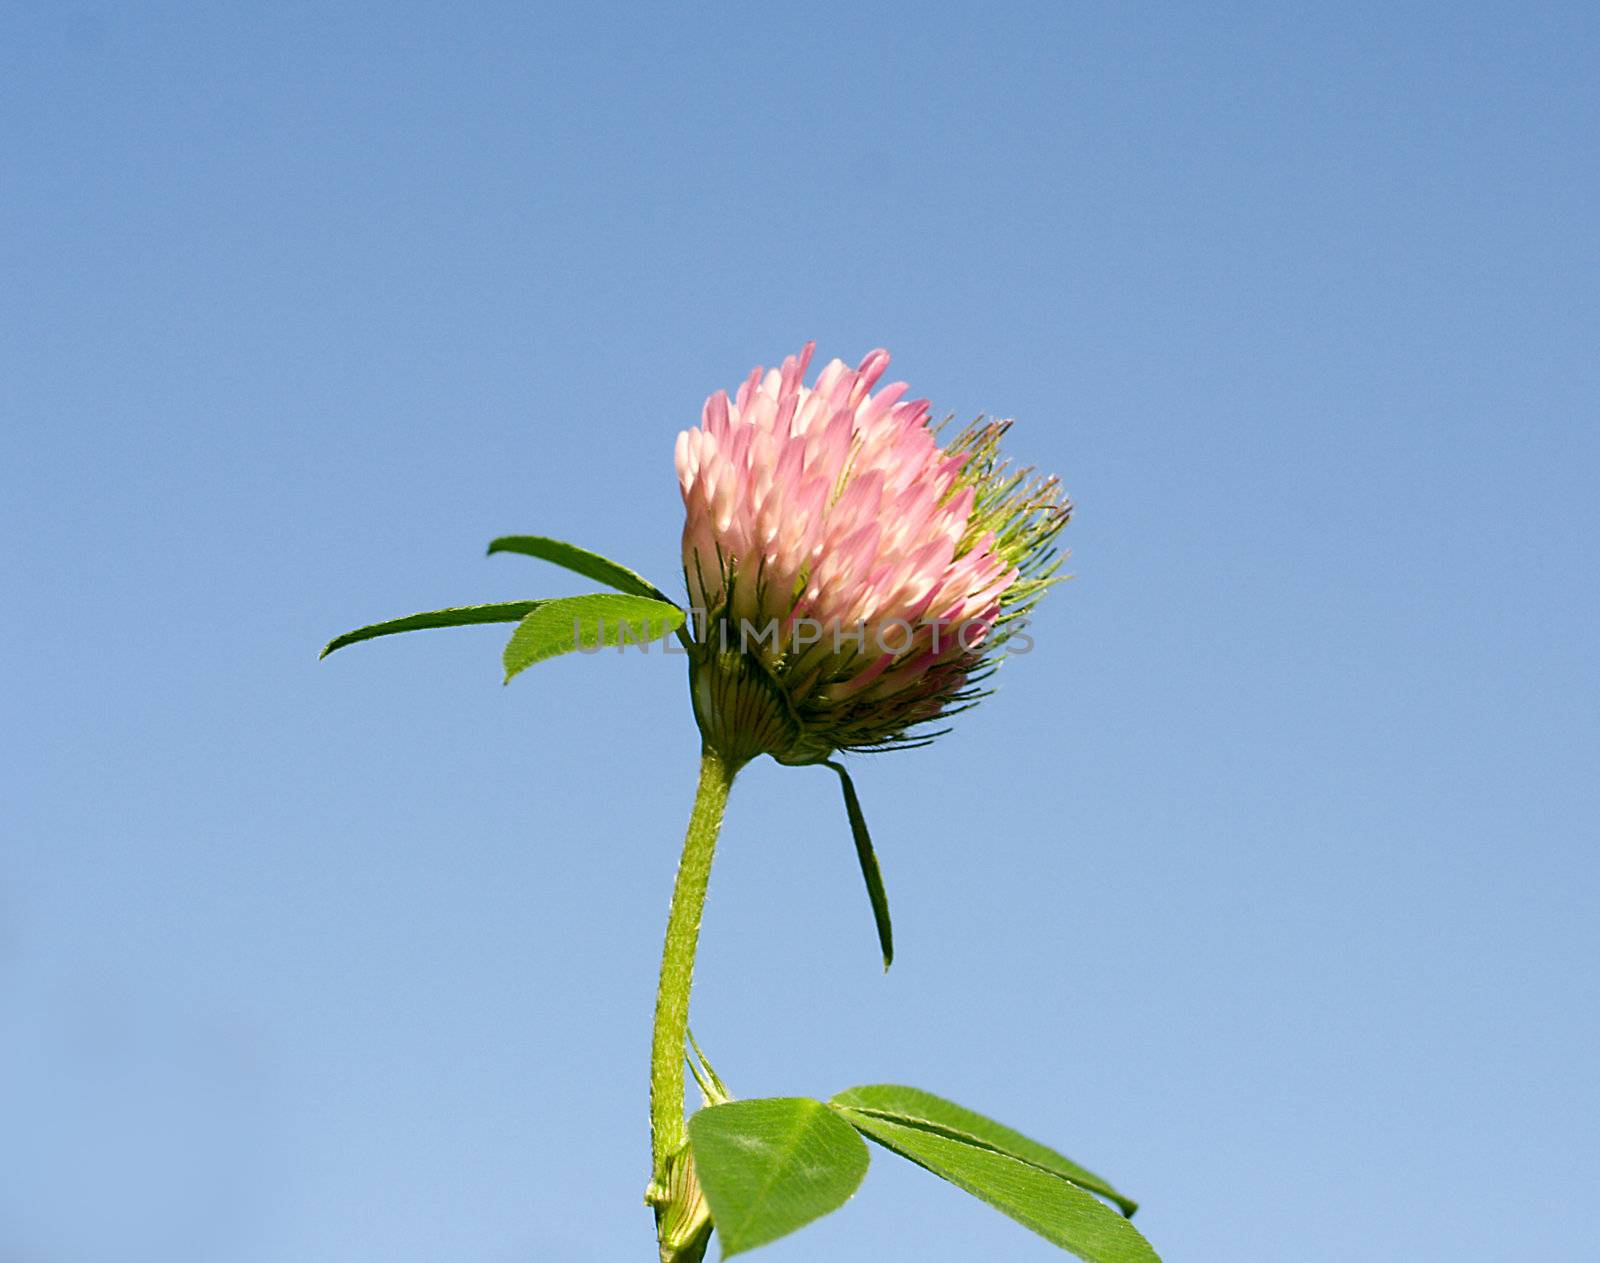 clover flower on blue sky background